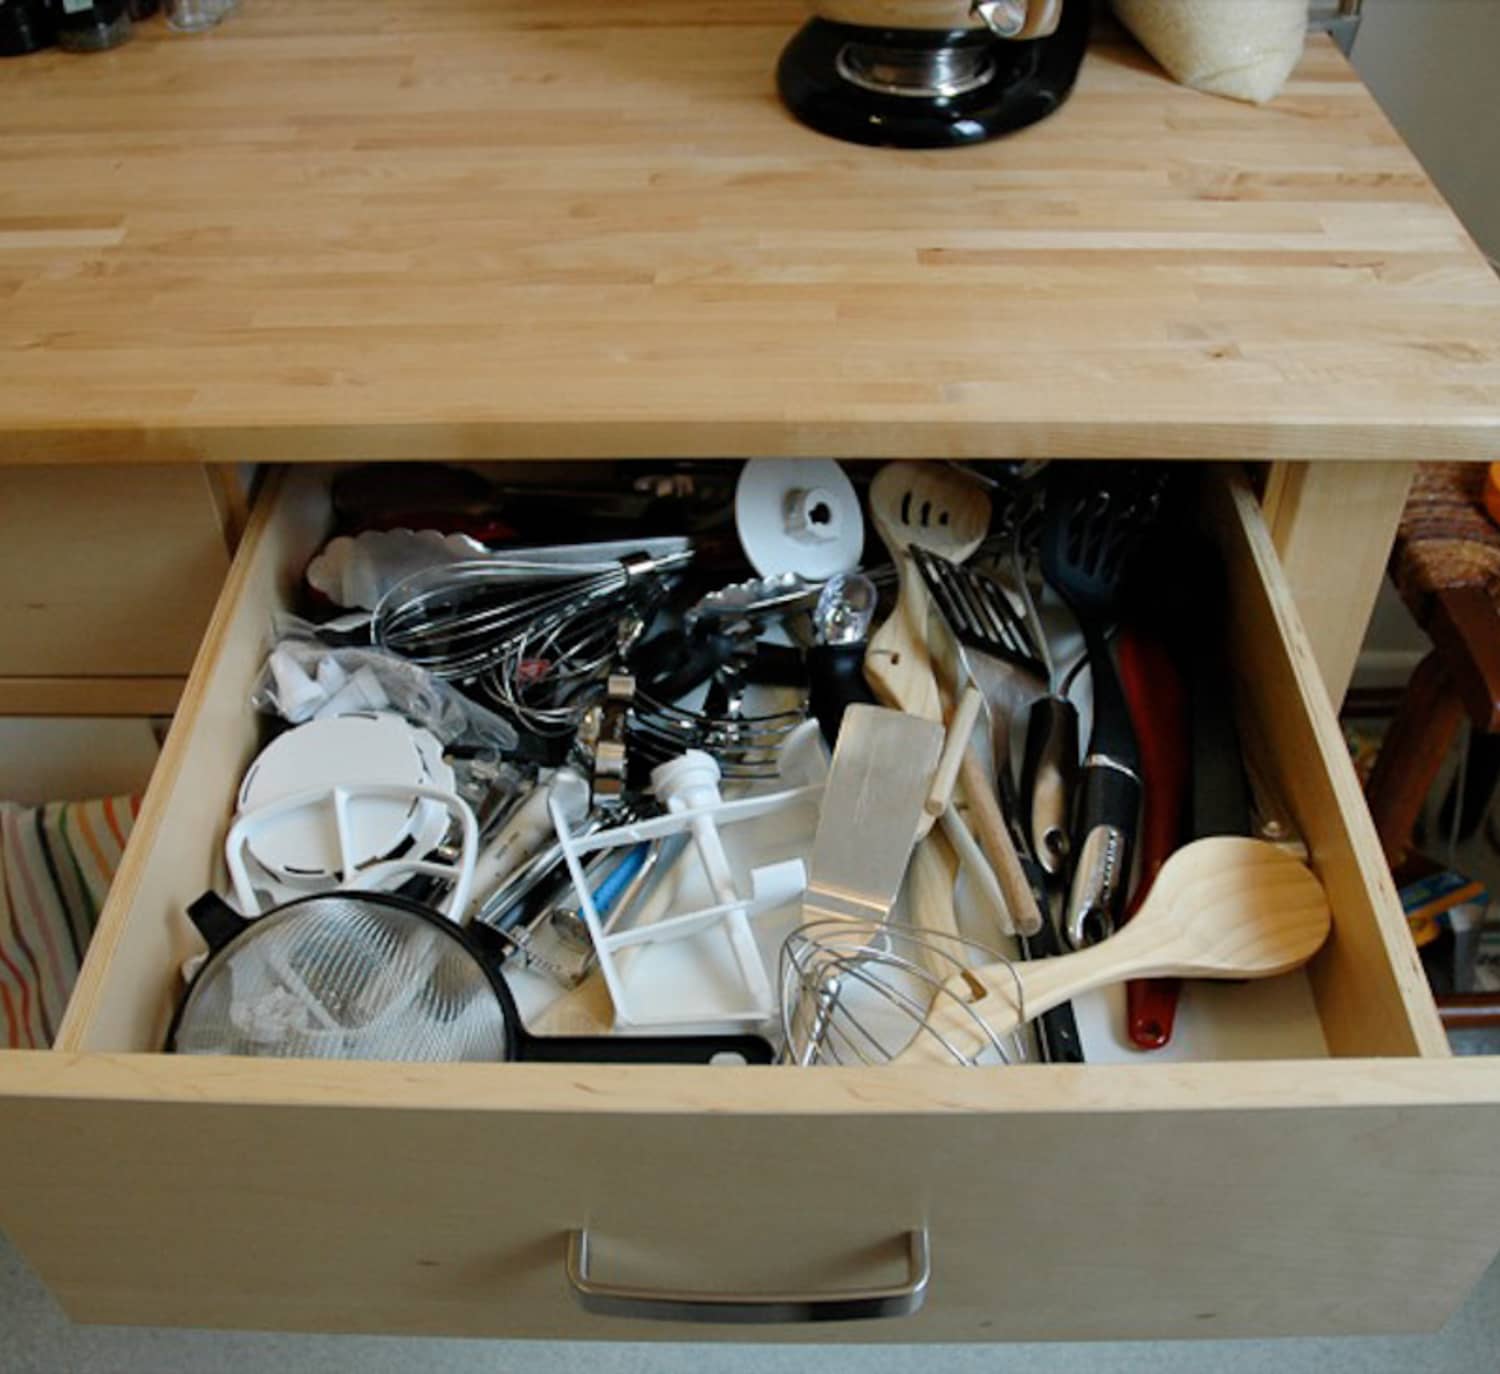 Stay Organized - Declutter